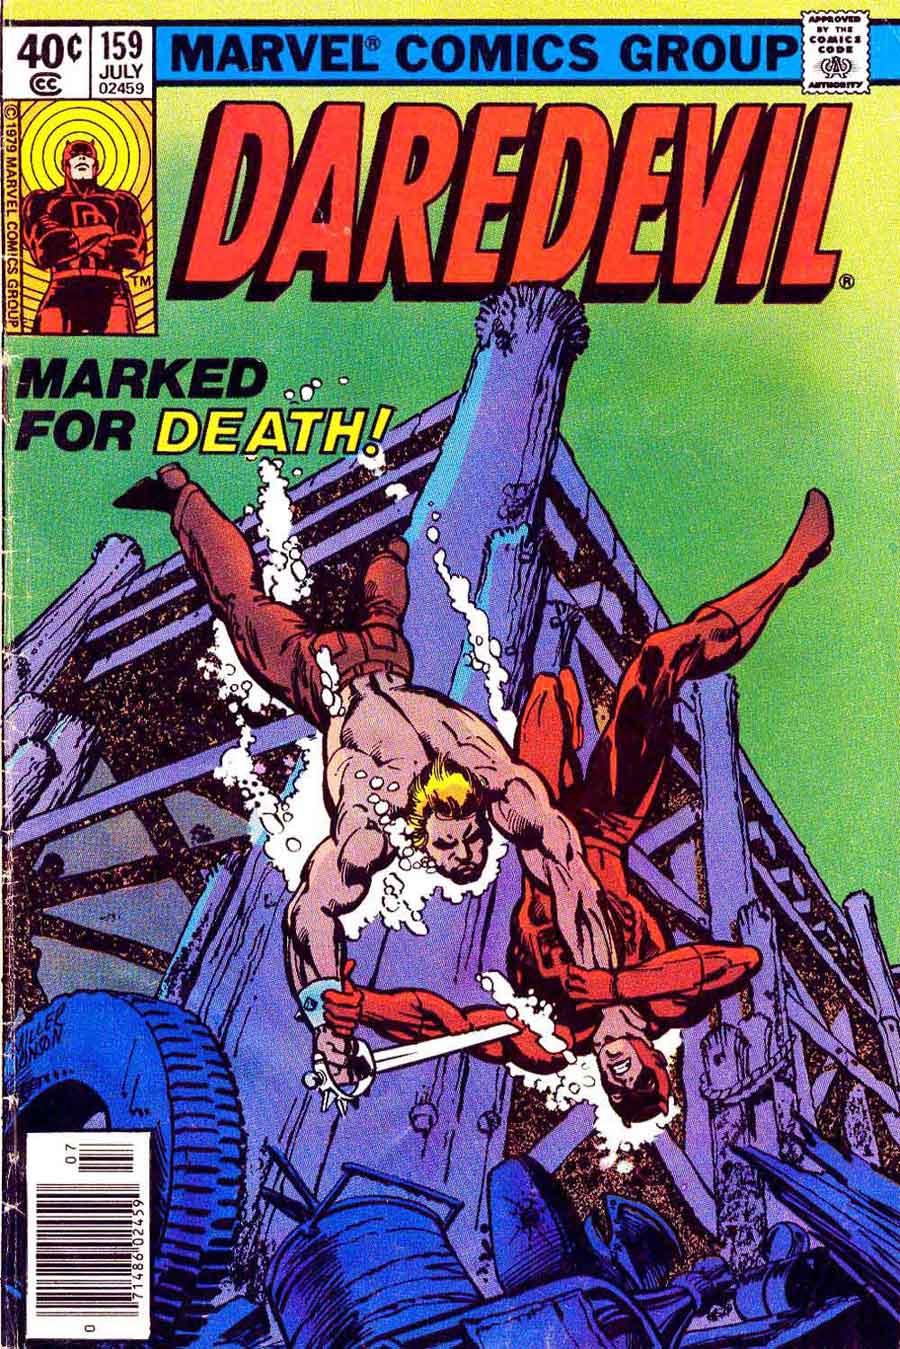 Daredevil v1 #159 marvel comic book cover art by Frank Miller